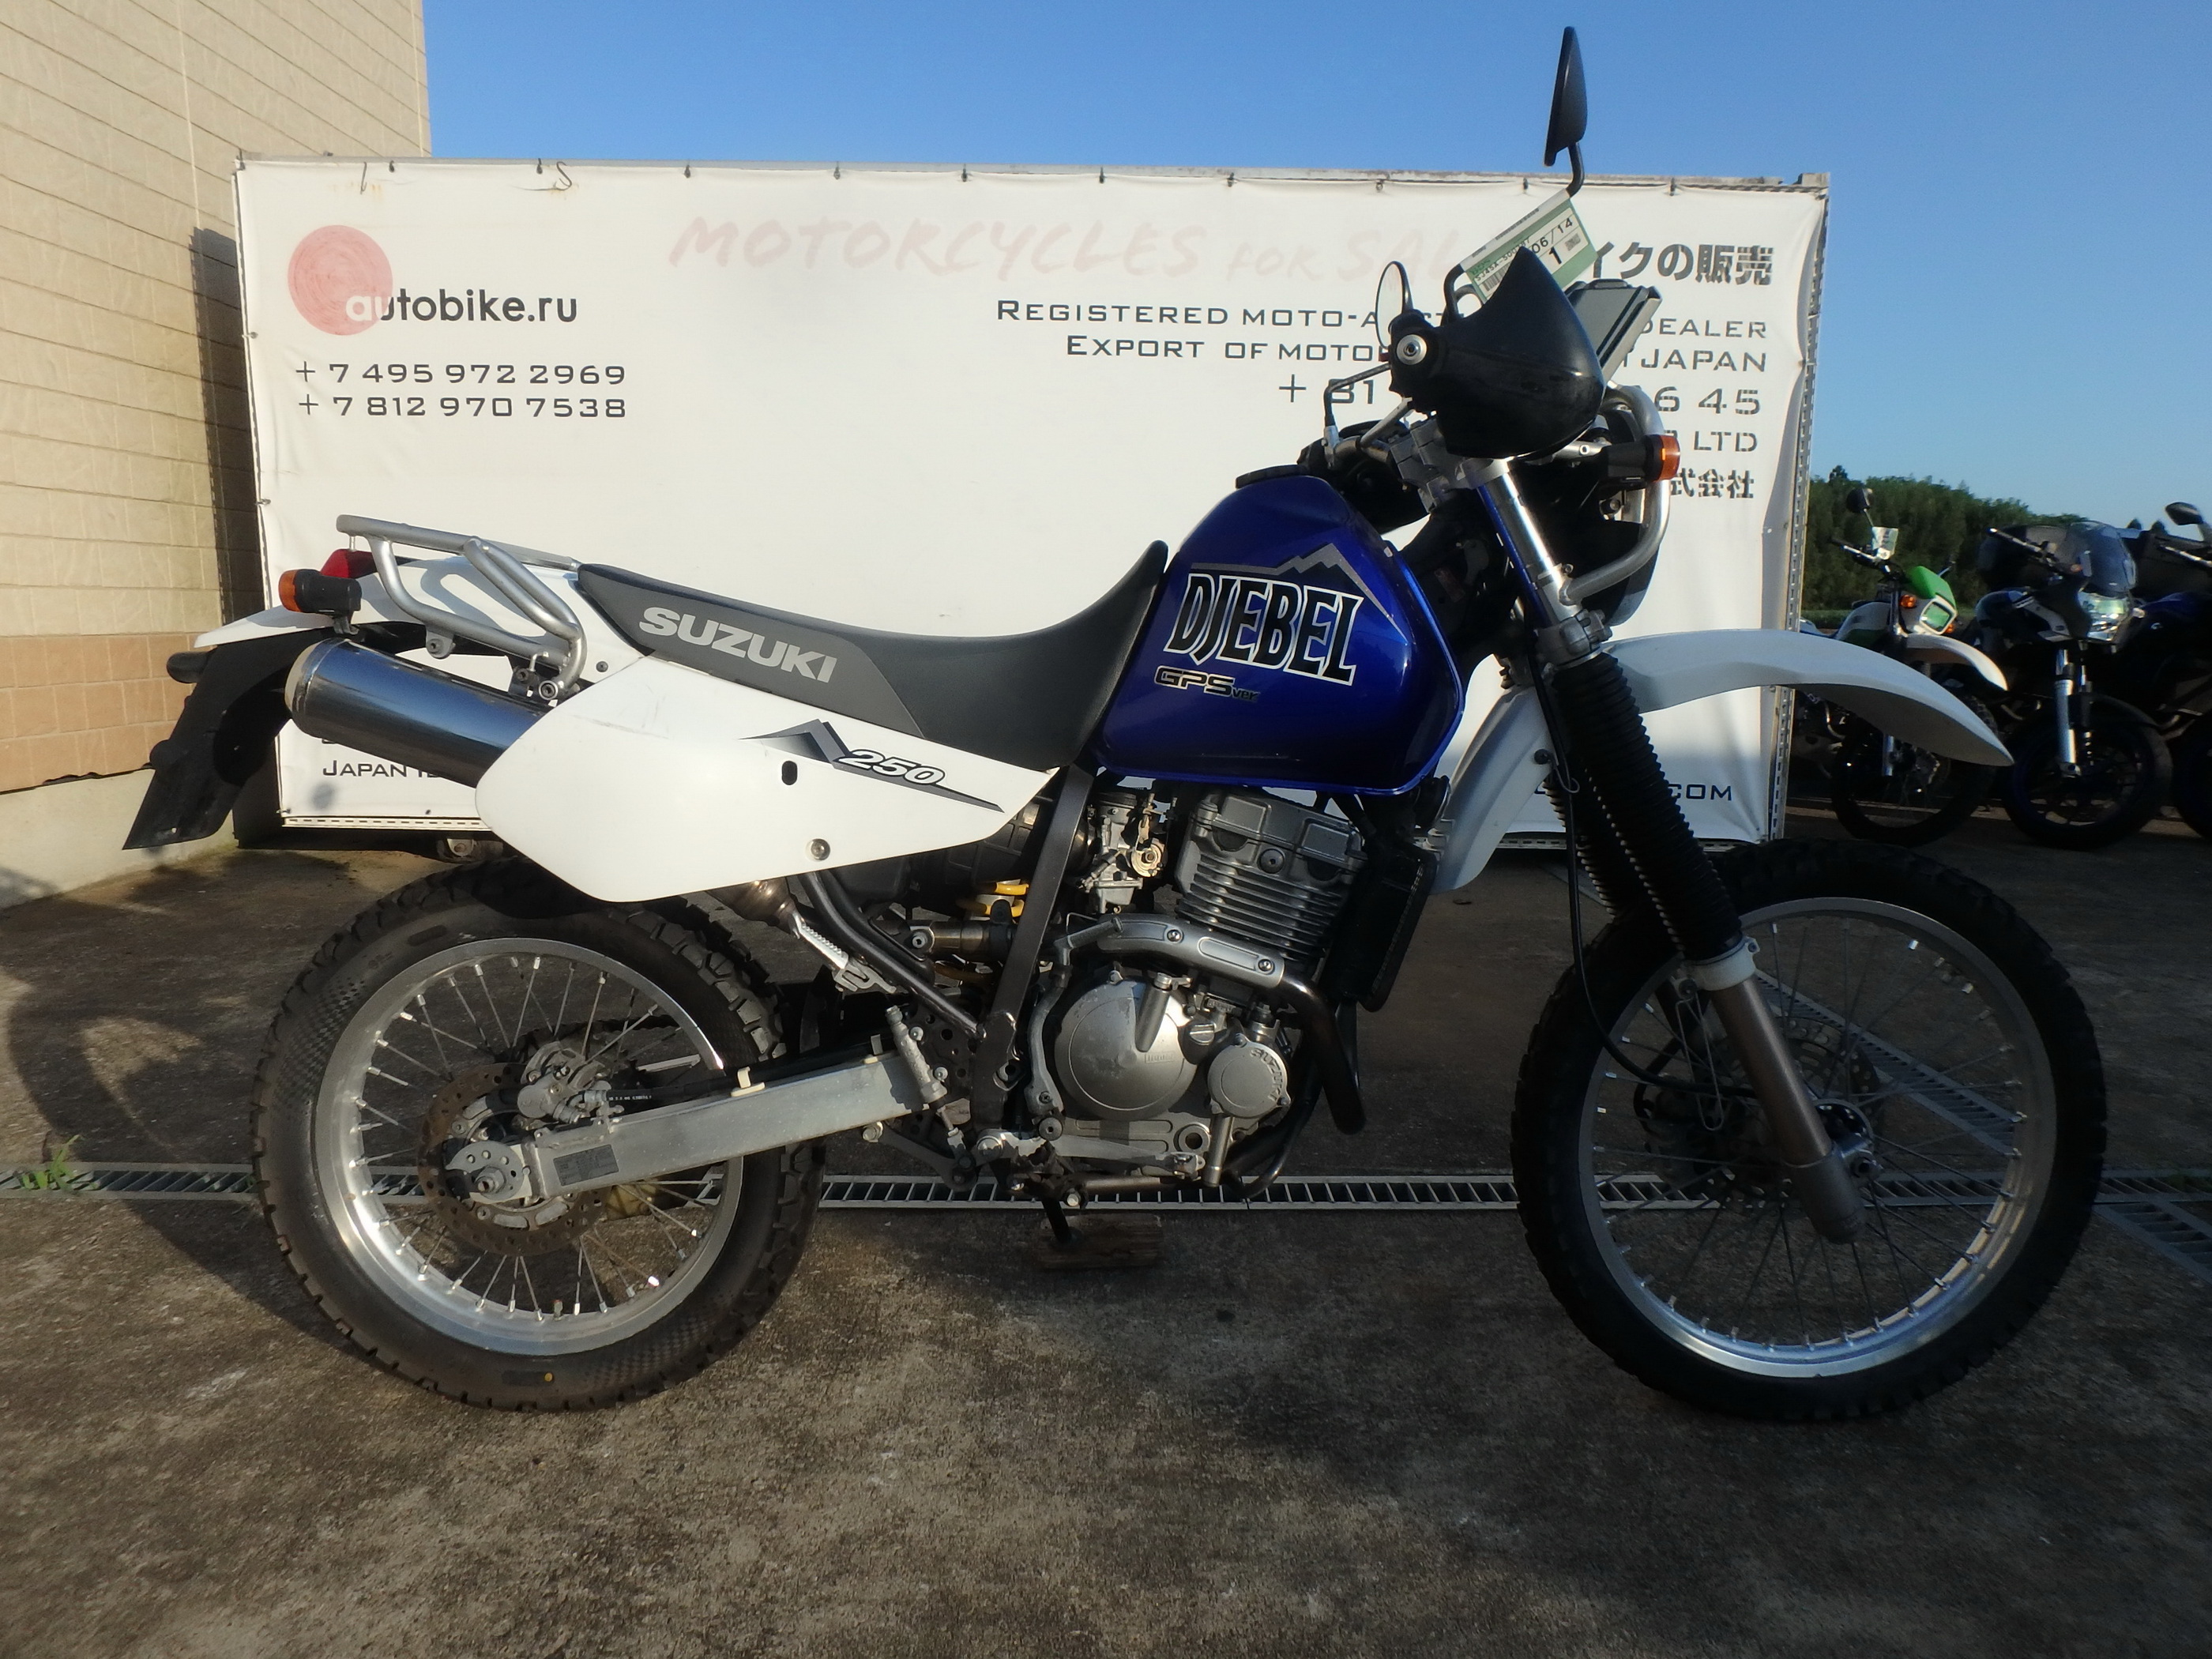 Купить мотоцикл Suzuki Djebel250GPS DR250 2000 фото 8